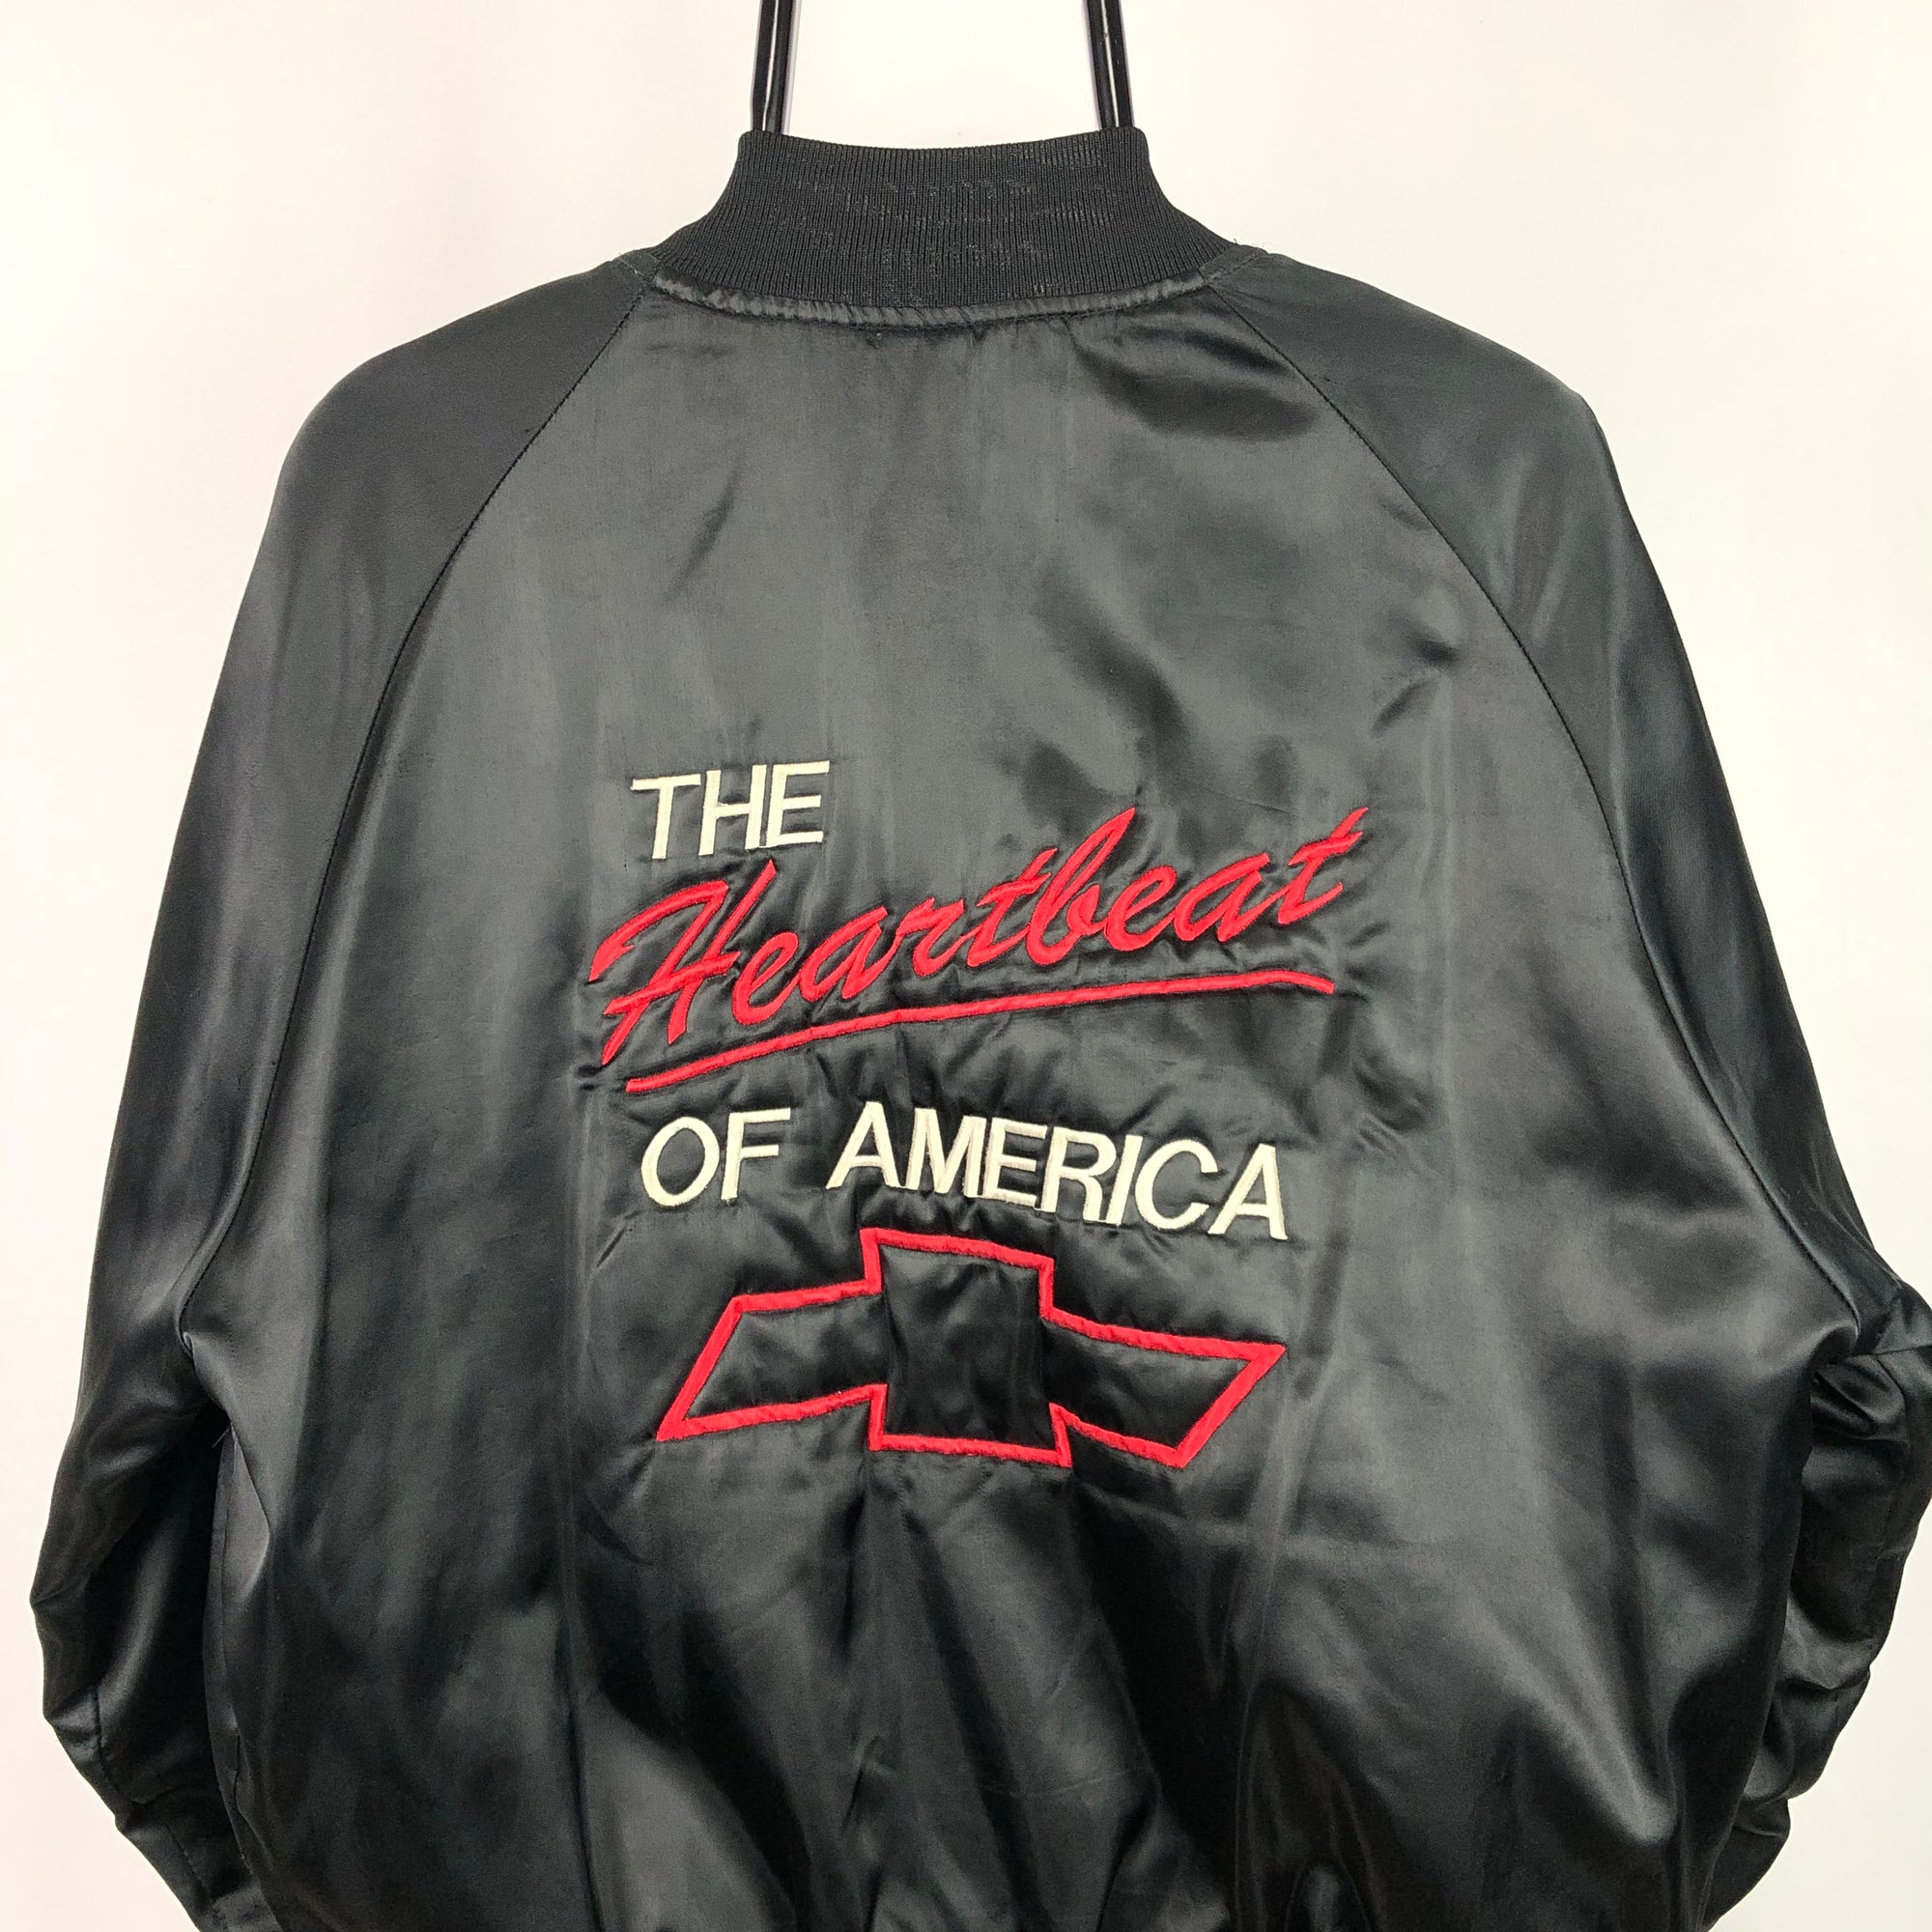 Vintage 90s Chevrolet Bomber Jacket - Men's Medium/Women's Large